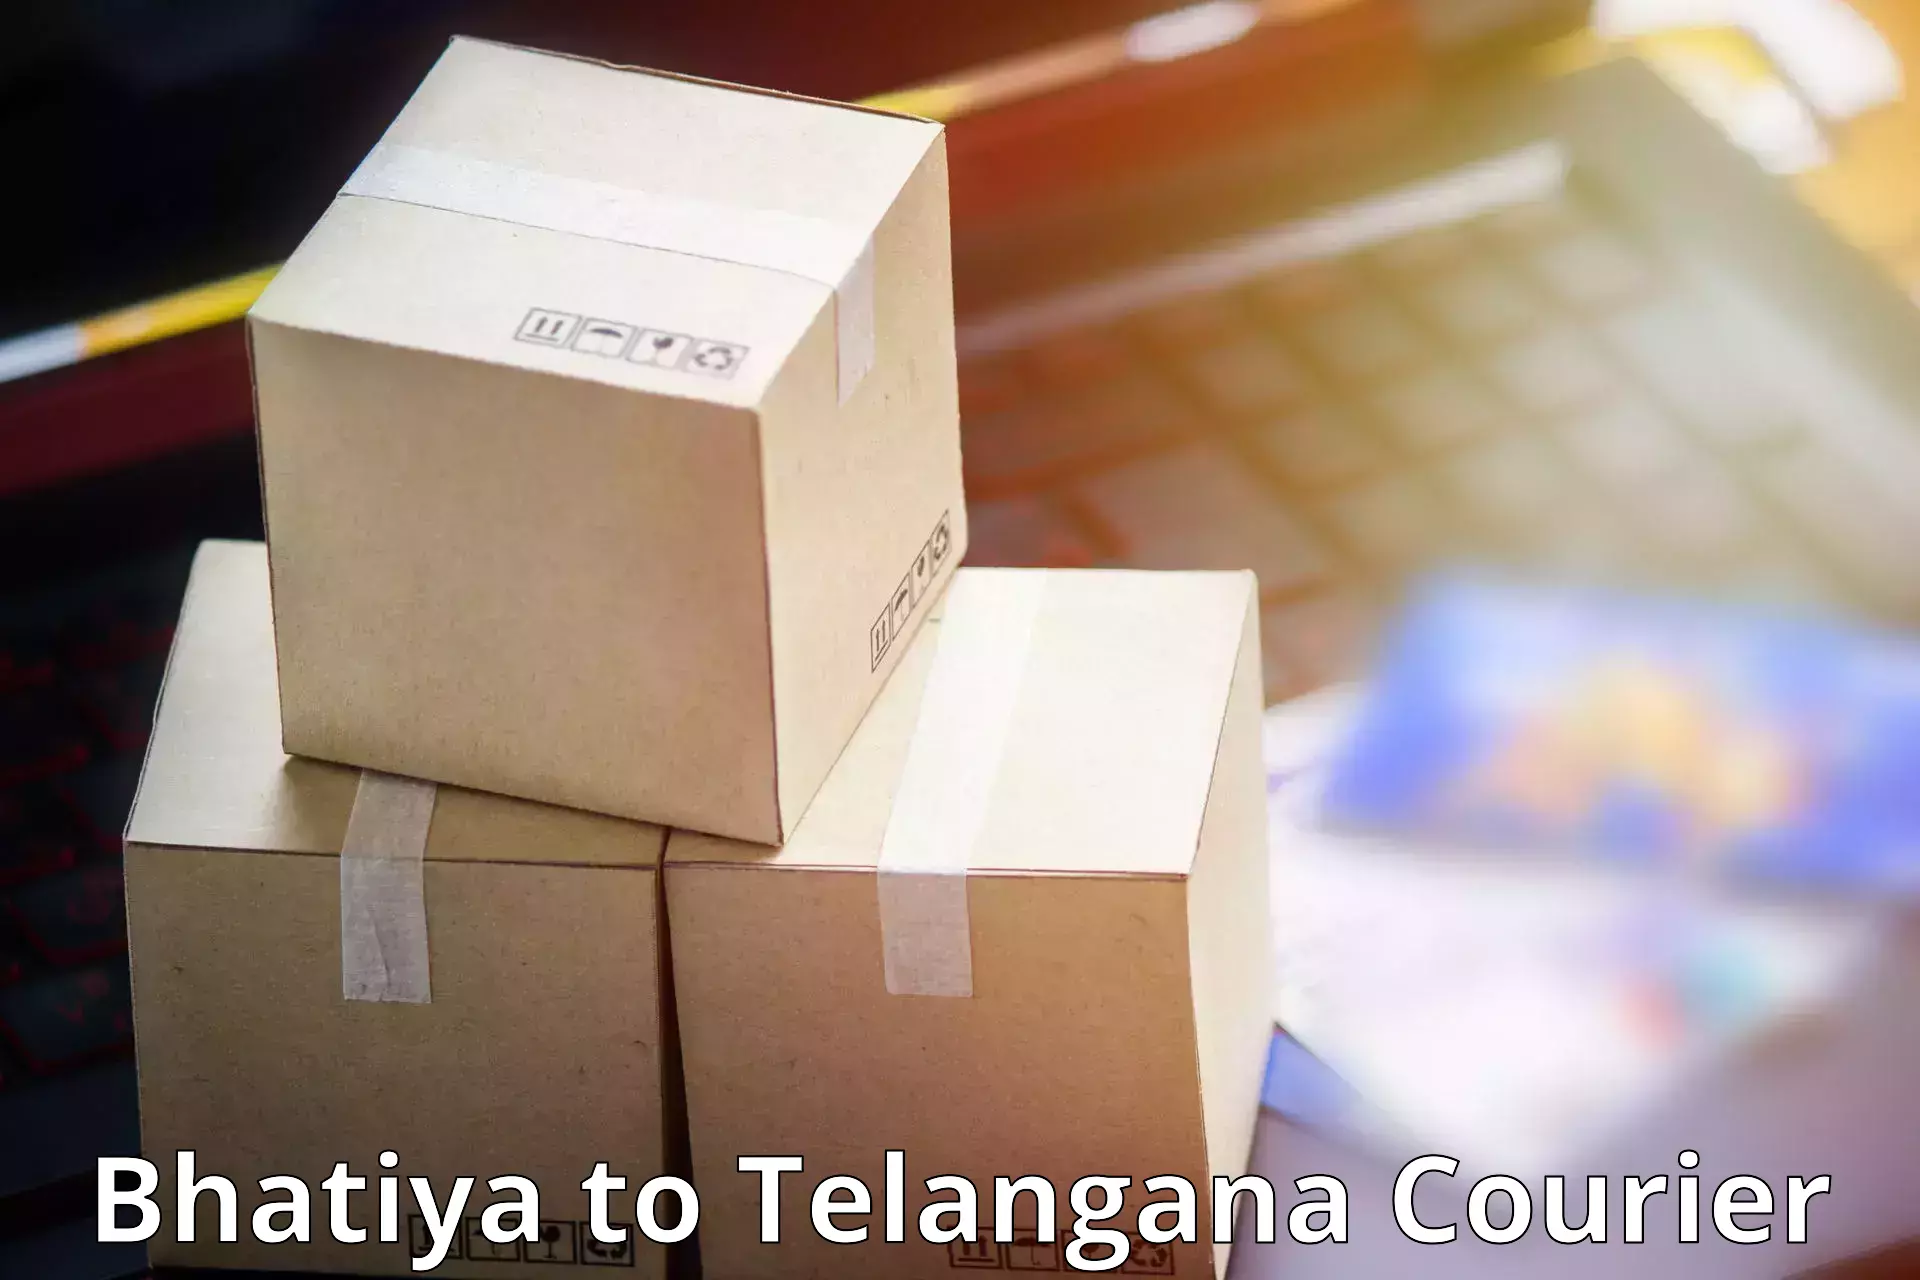 Courier service innovation Bhatiya to University of Hyderabad